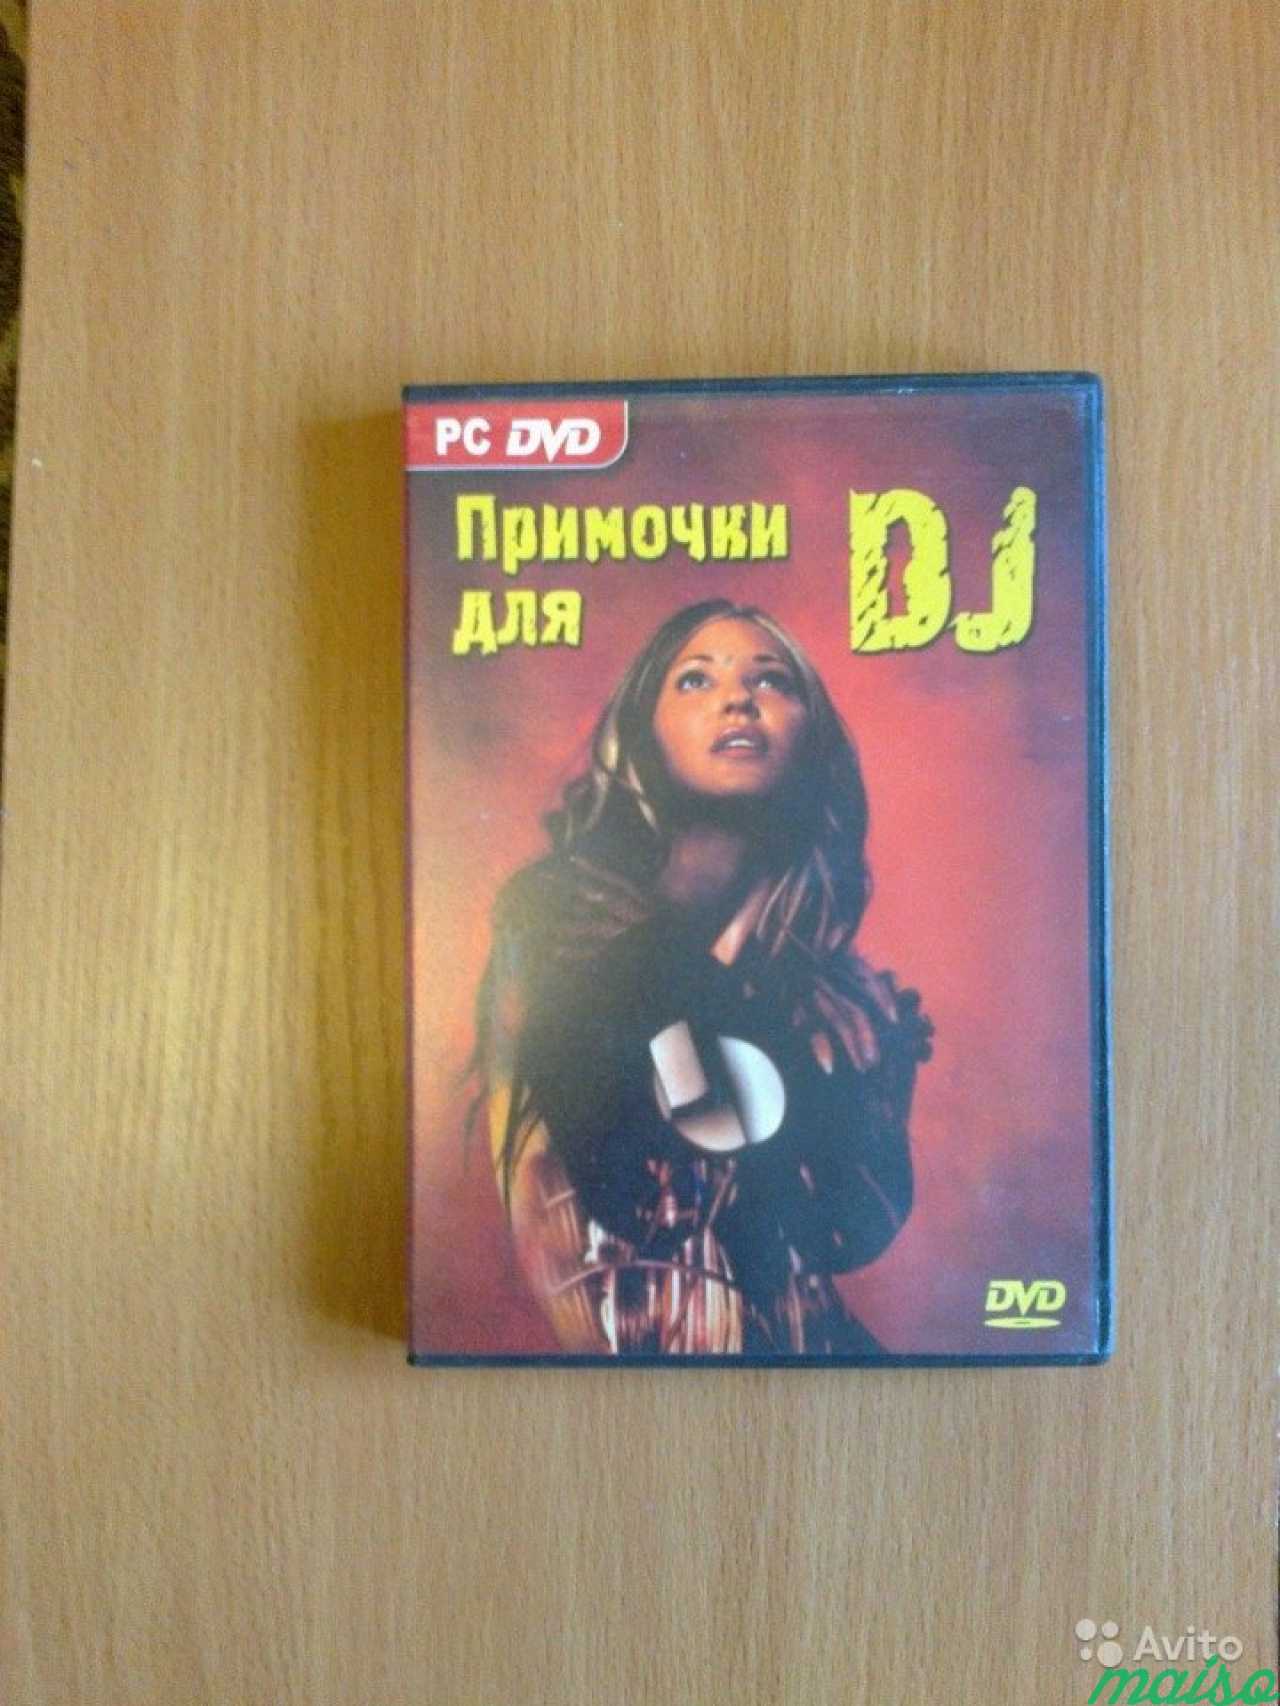 Продаю DVD CD (industrial-E.B.M.-synthpop) в Санкт-Петербурге. Фото 1